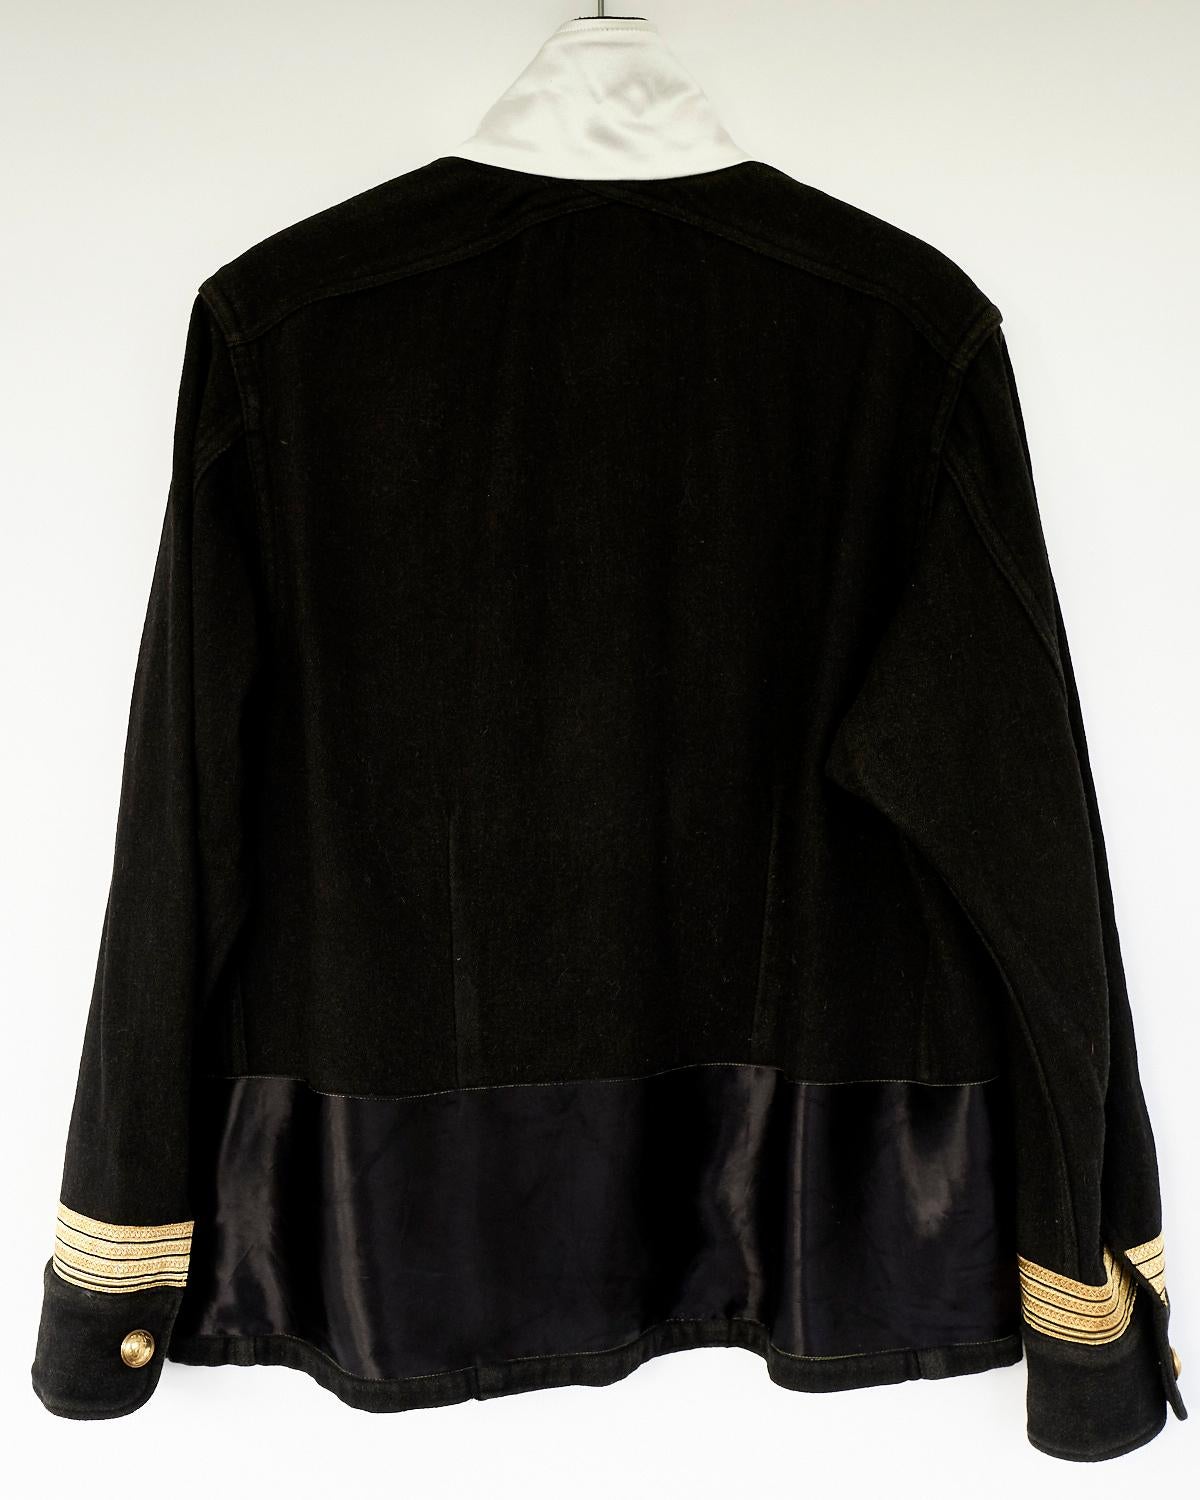 Black Jacket Wool Gold Braid Off White Silk Collar Embellished Military J Dauphin